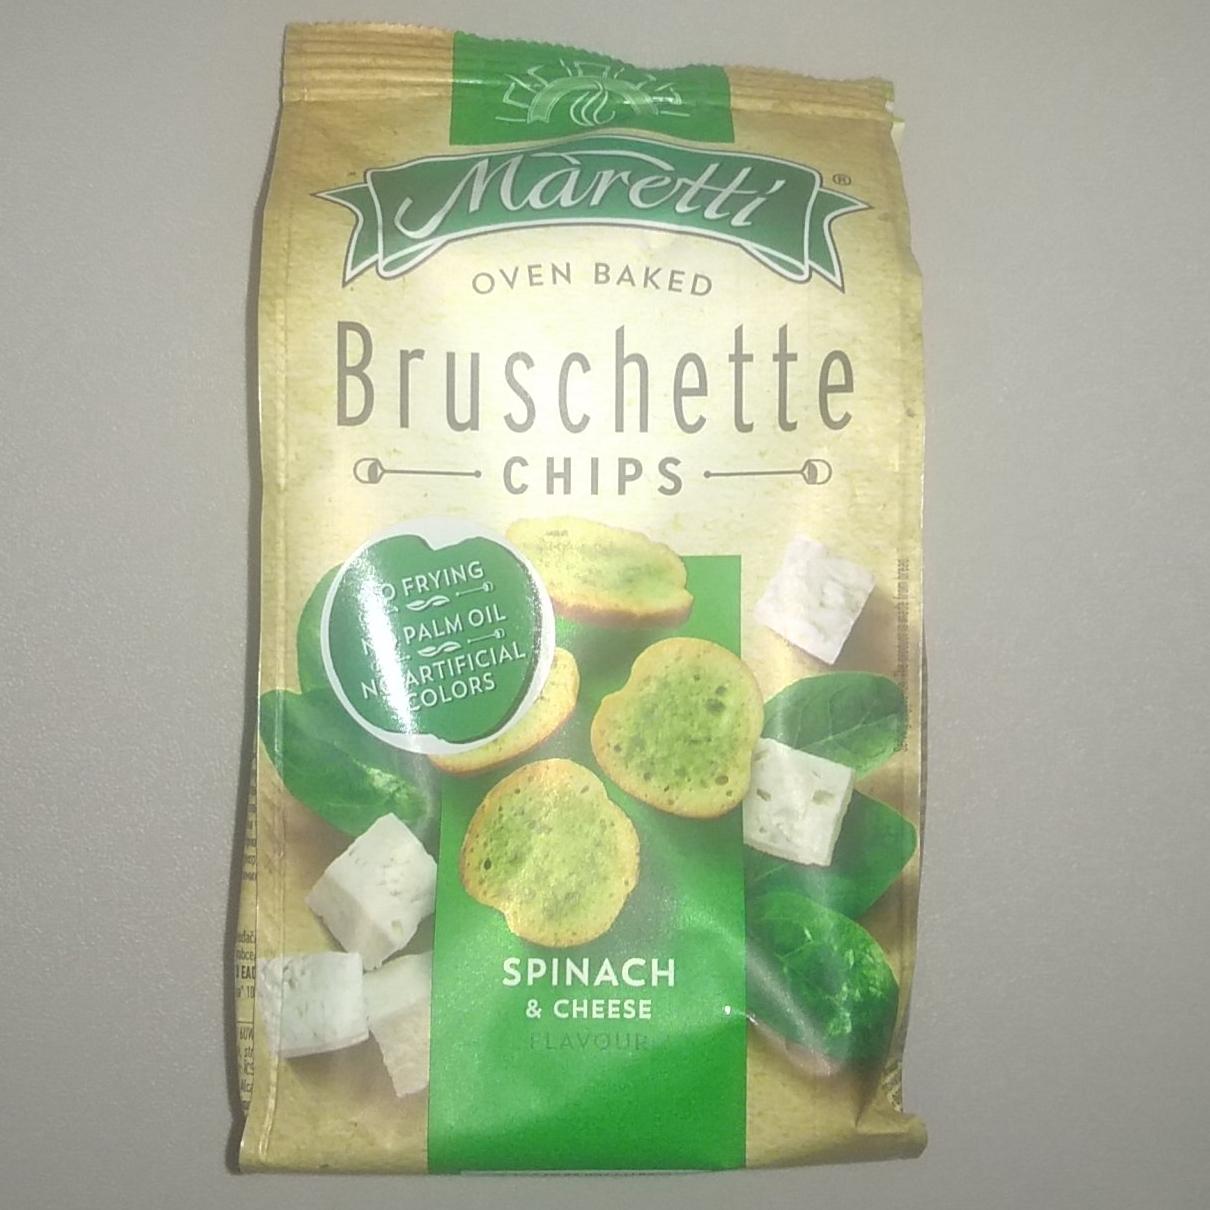 Fotografie - Bruschette chips spinach & cheese Maretti